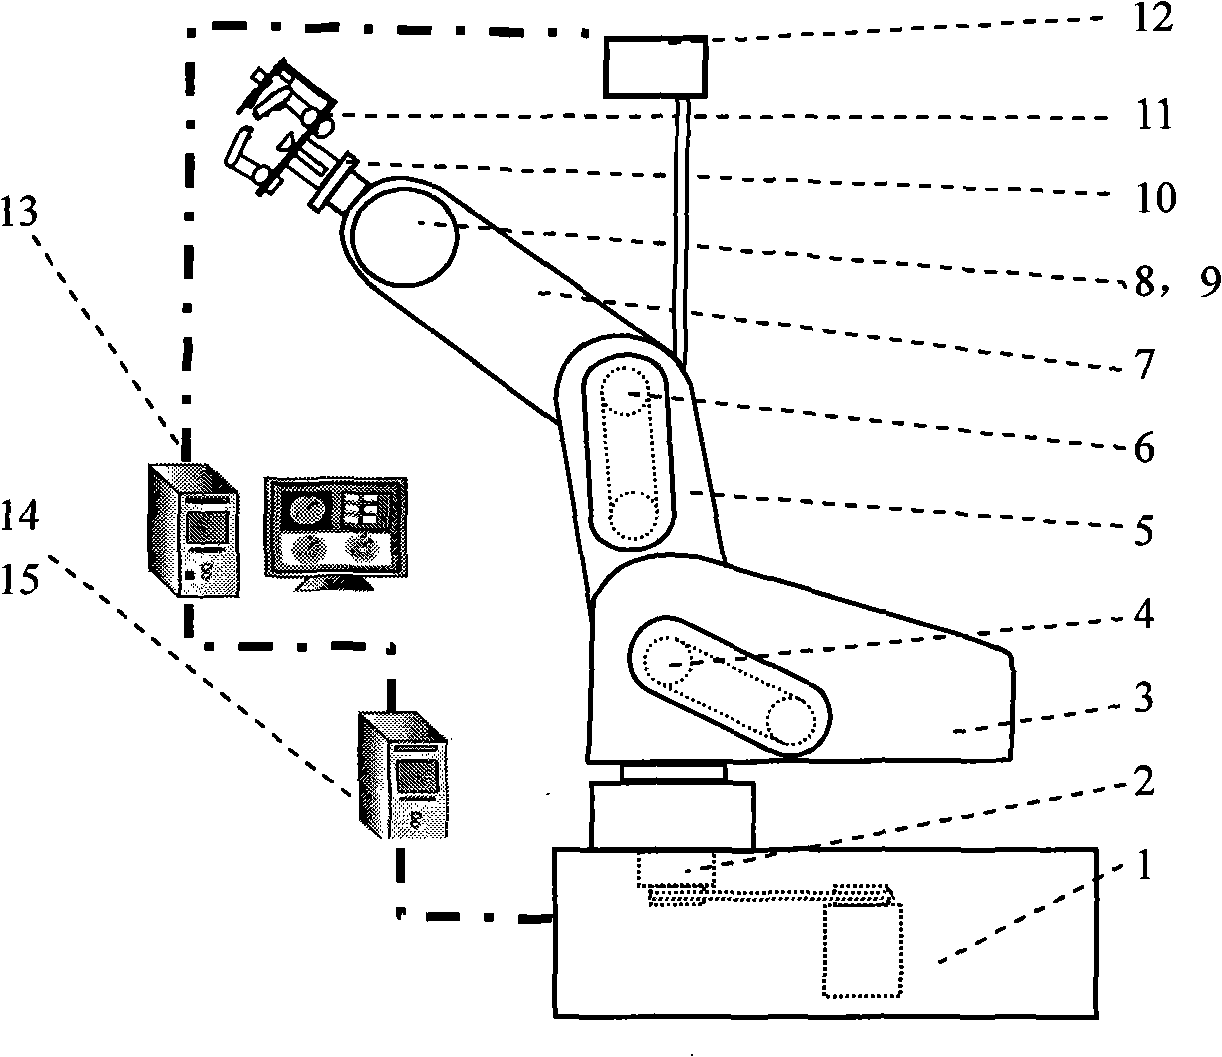 Apparatus and method for flexible pick of orange picking robot